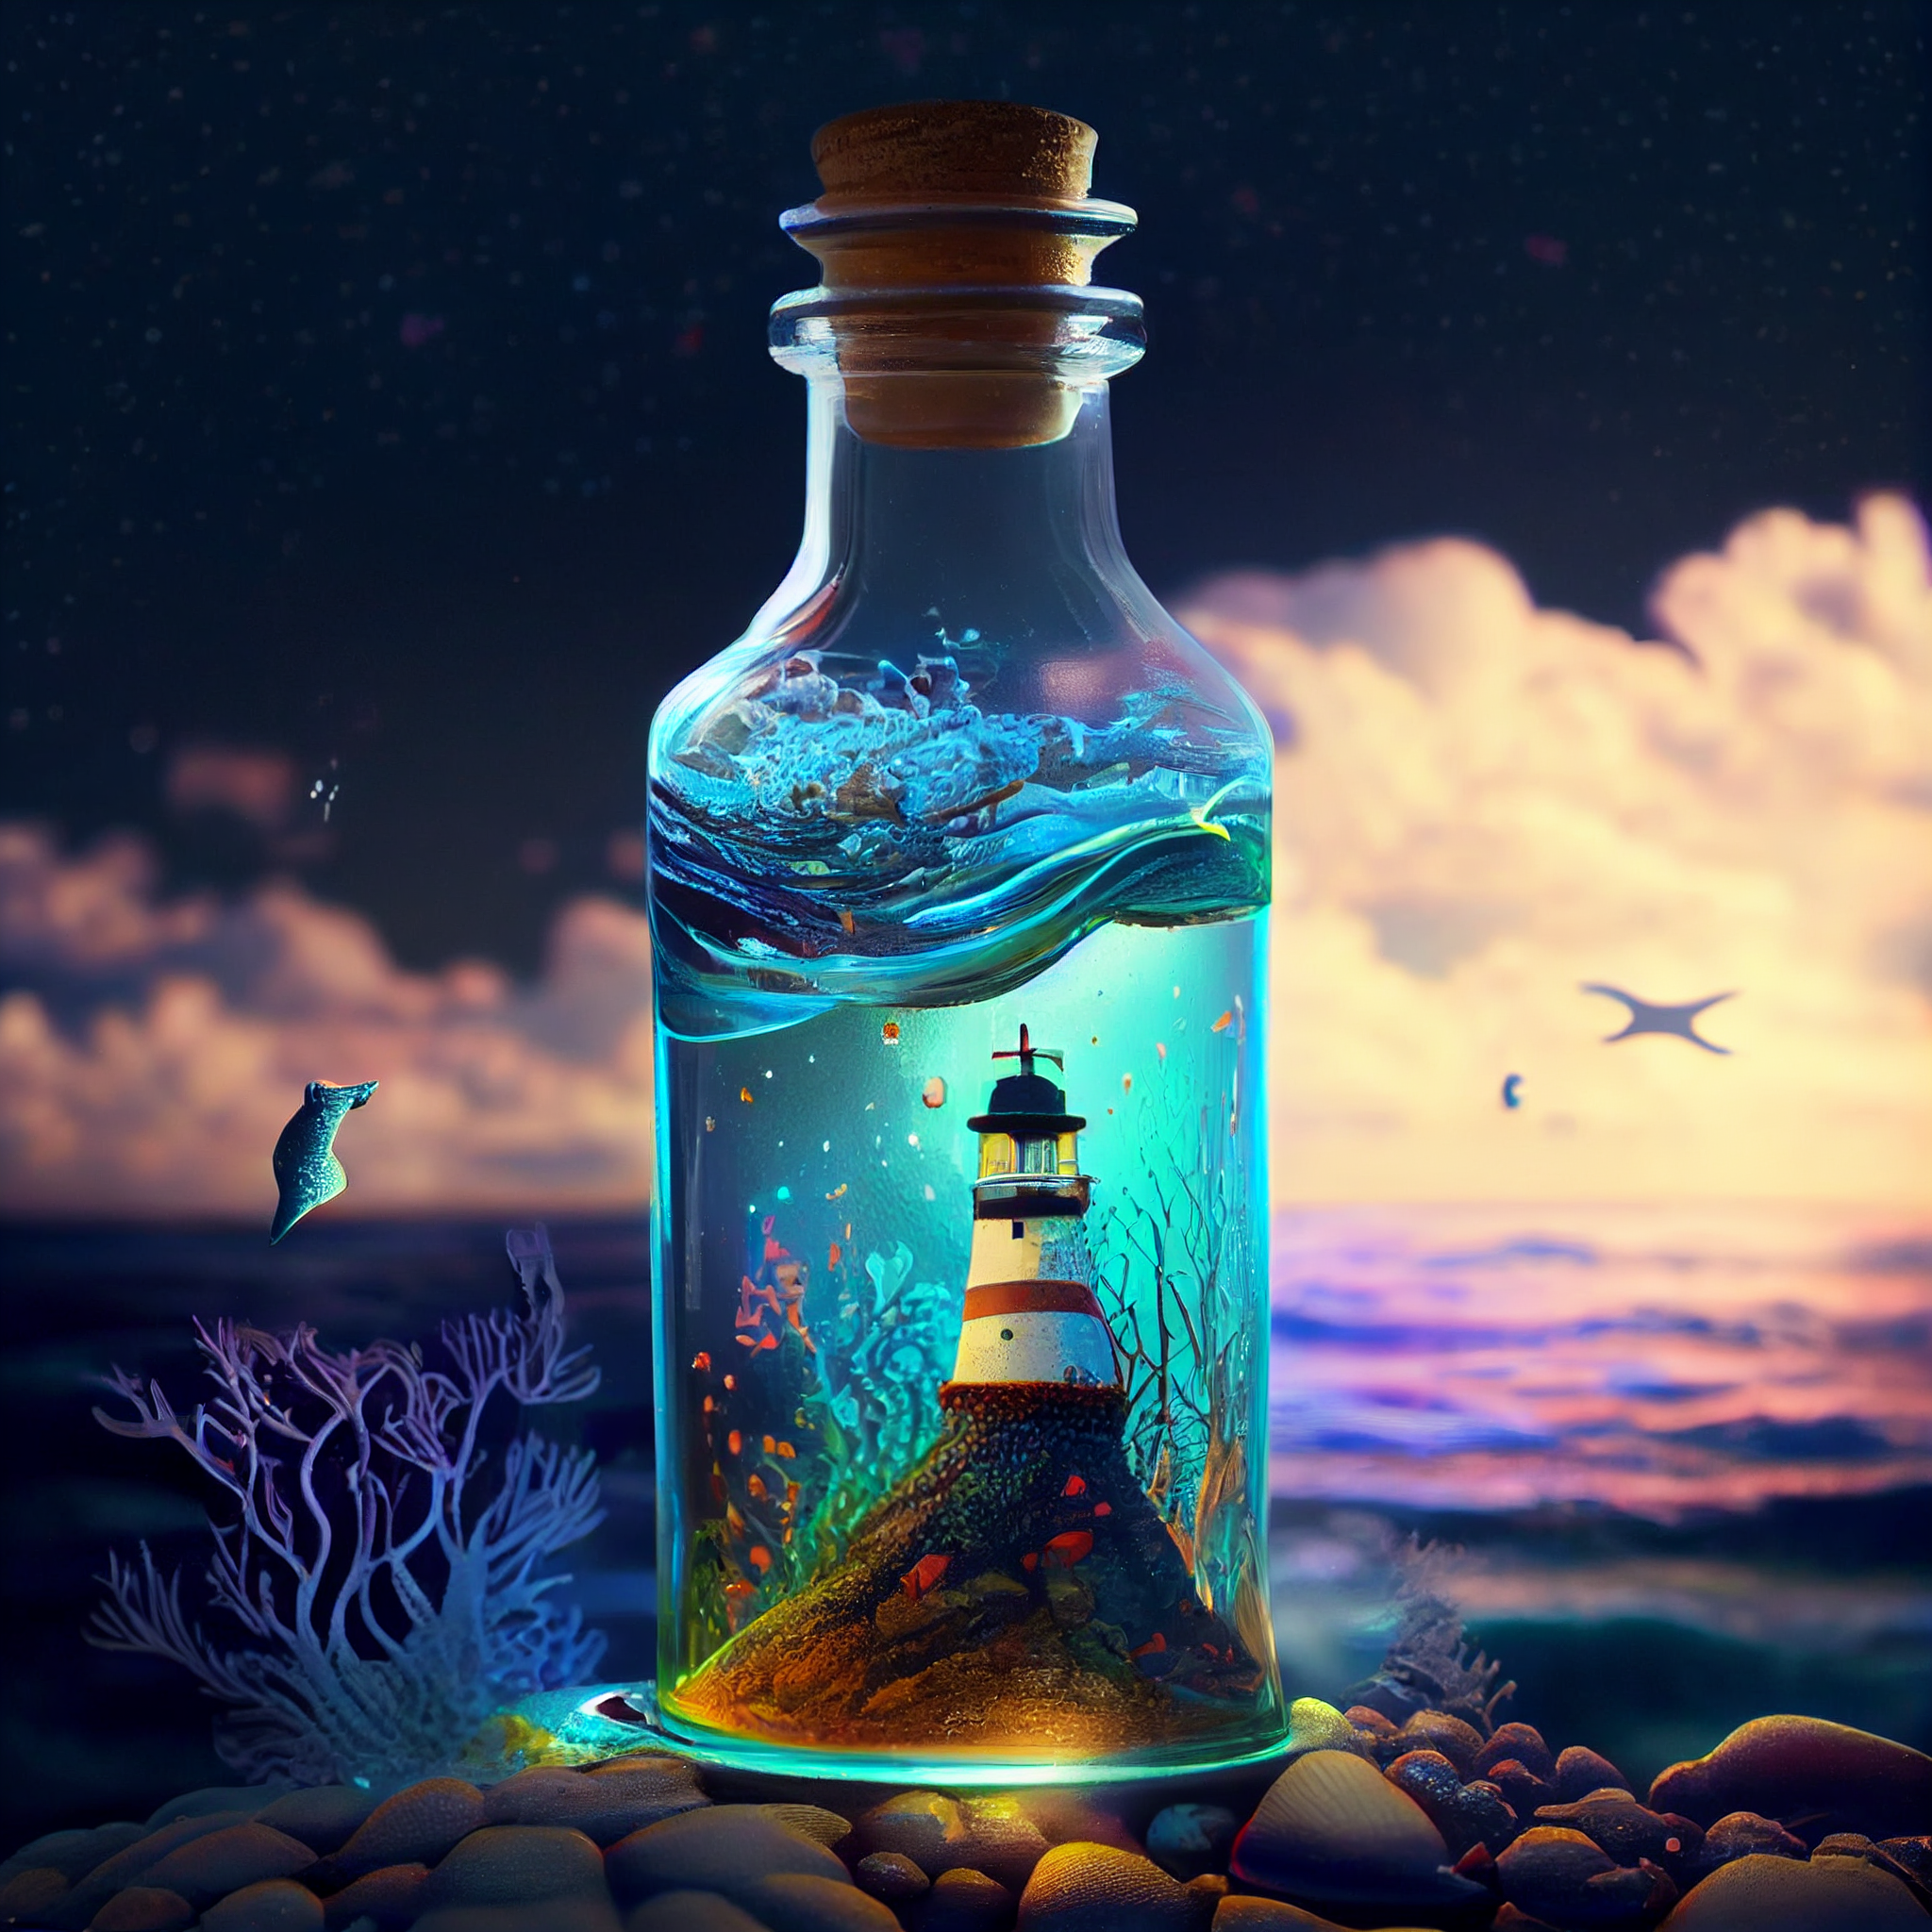 "Sea Life with a Light House Inside a Glass Bottle Print"